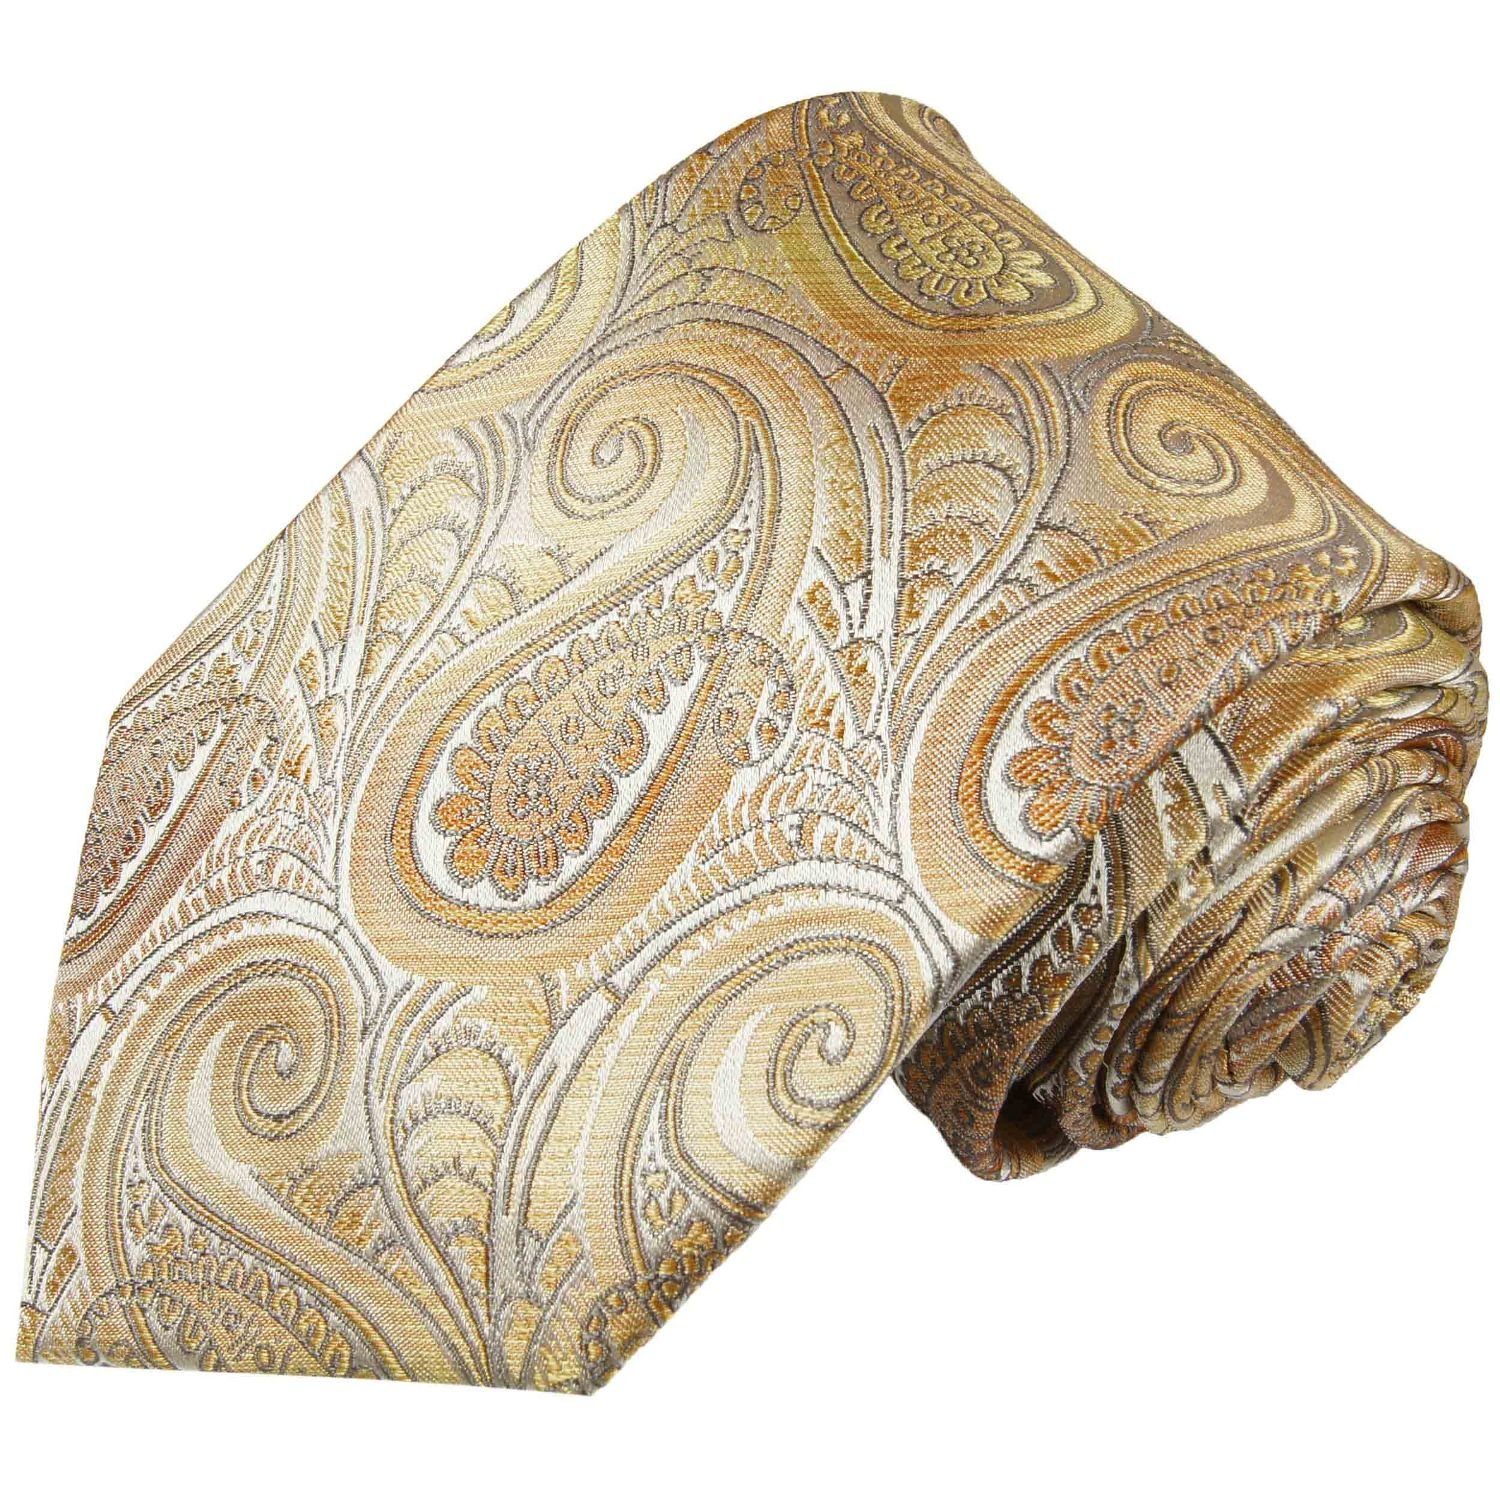 Paul Malone Krawatte Elegante Seidenkrawatte Herren Schlips paisley brokat 100% Seide Schmal (6cm), gelb braun 2010